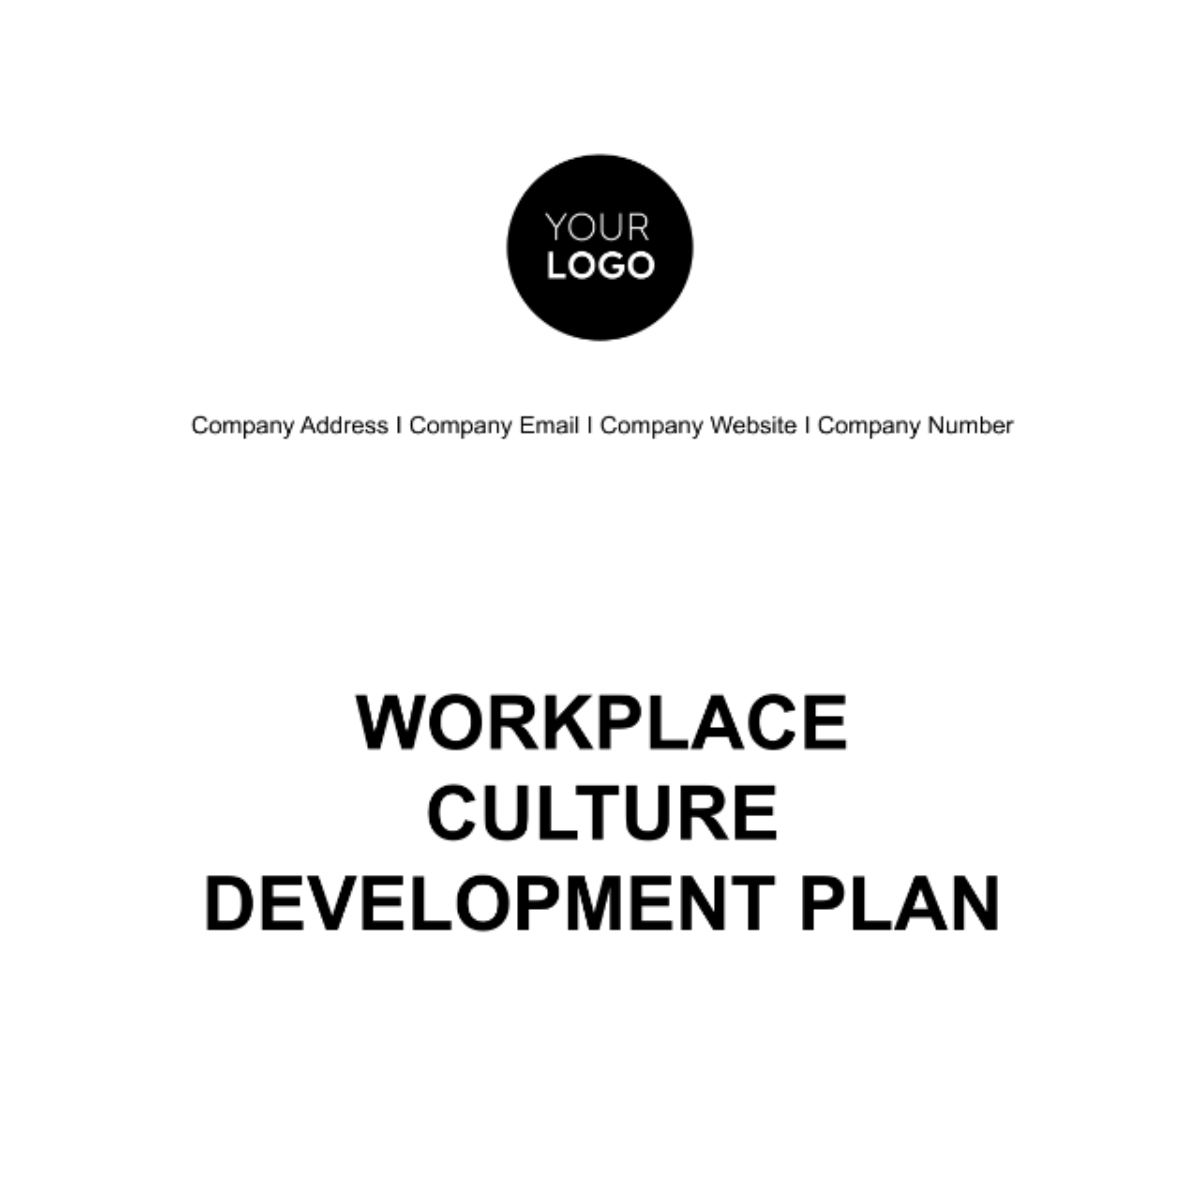 Free Workplace Culture Development Plan HR Template